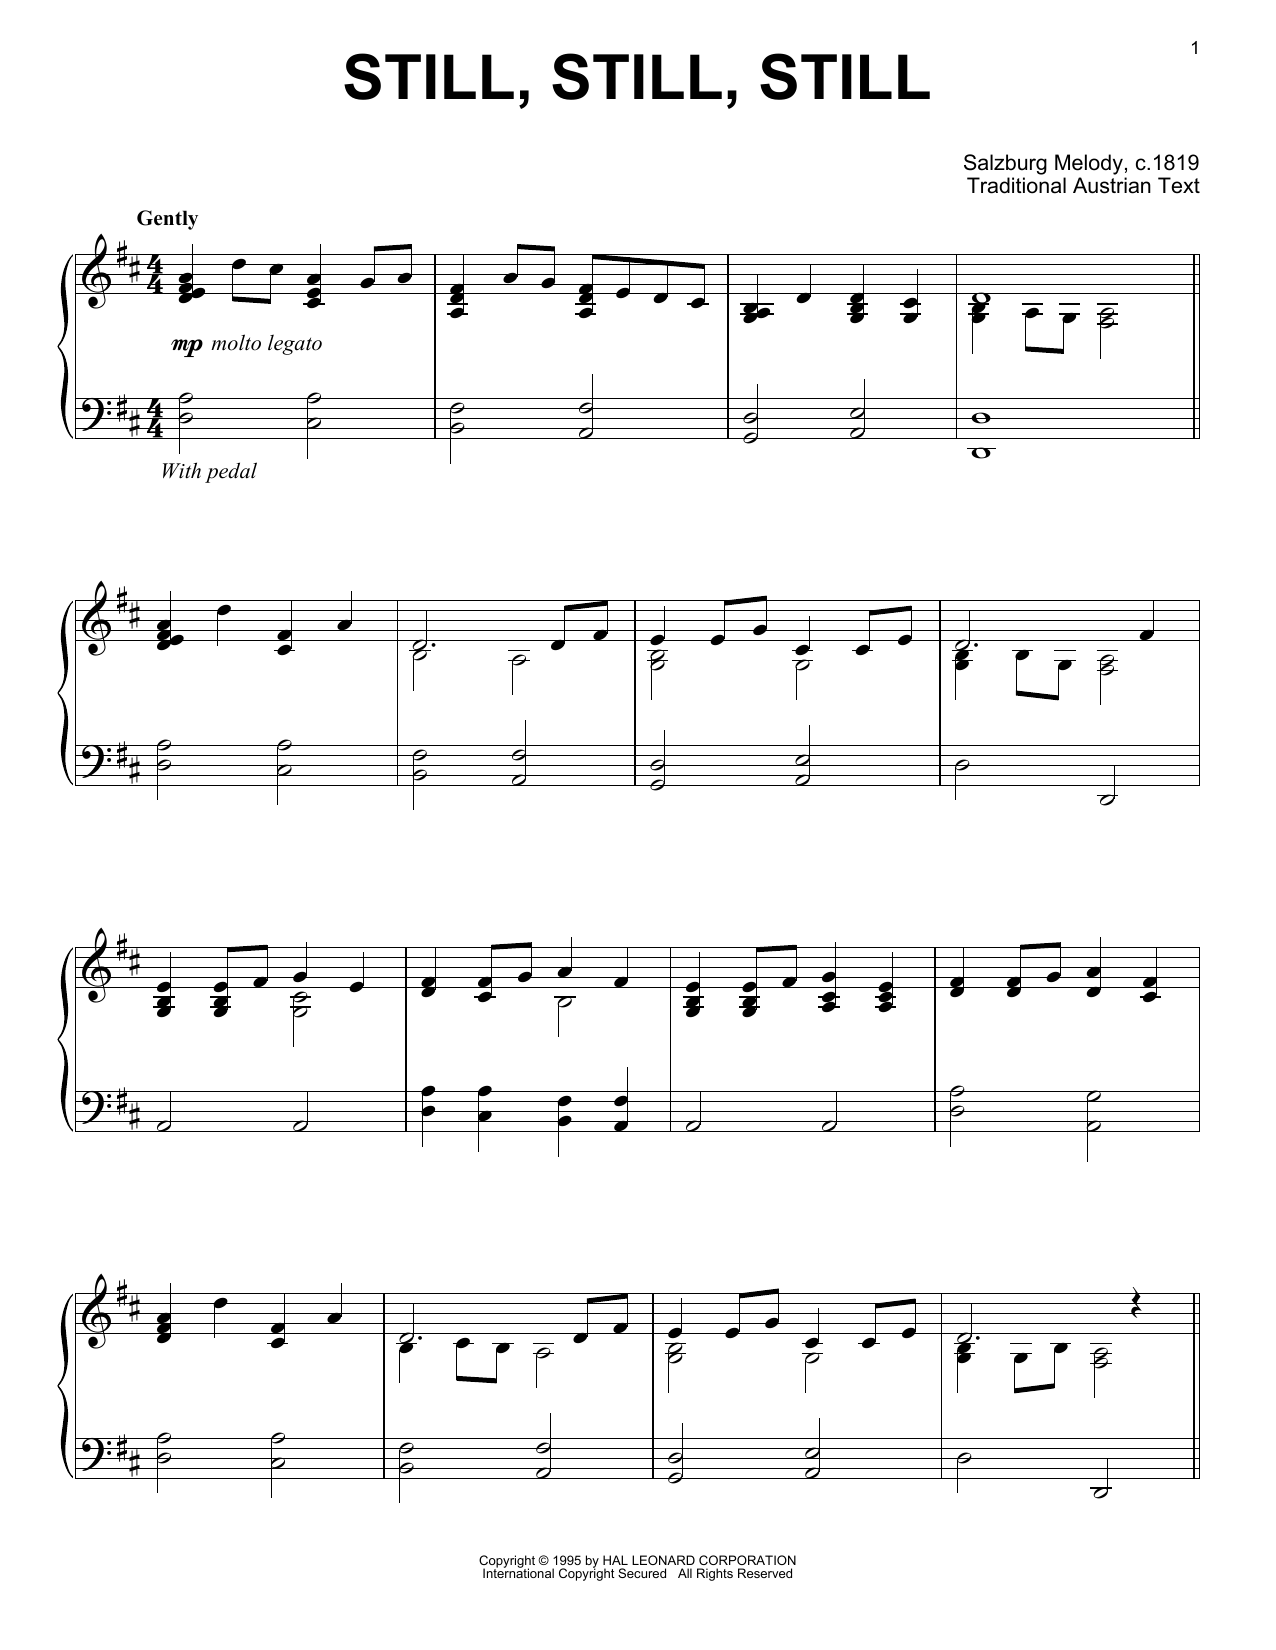 Traditional Austrian Text Still, Still, Still sheet music notes and chords arranged for Alto Sax Solo